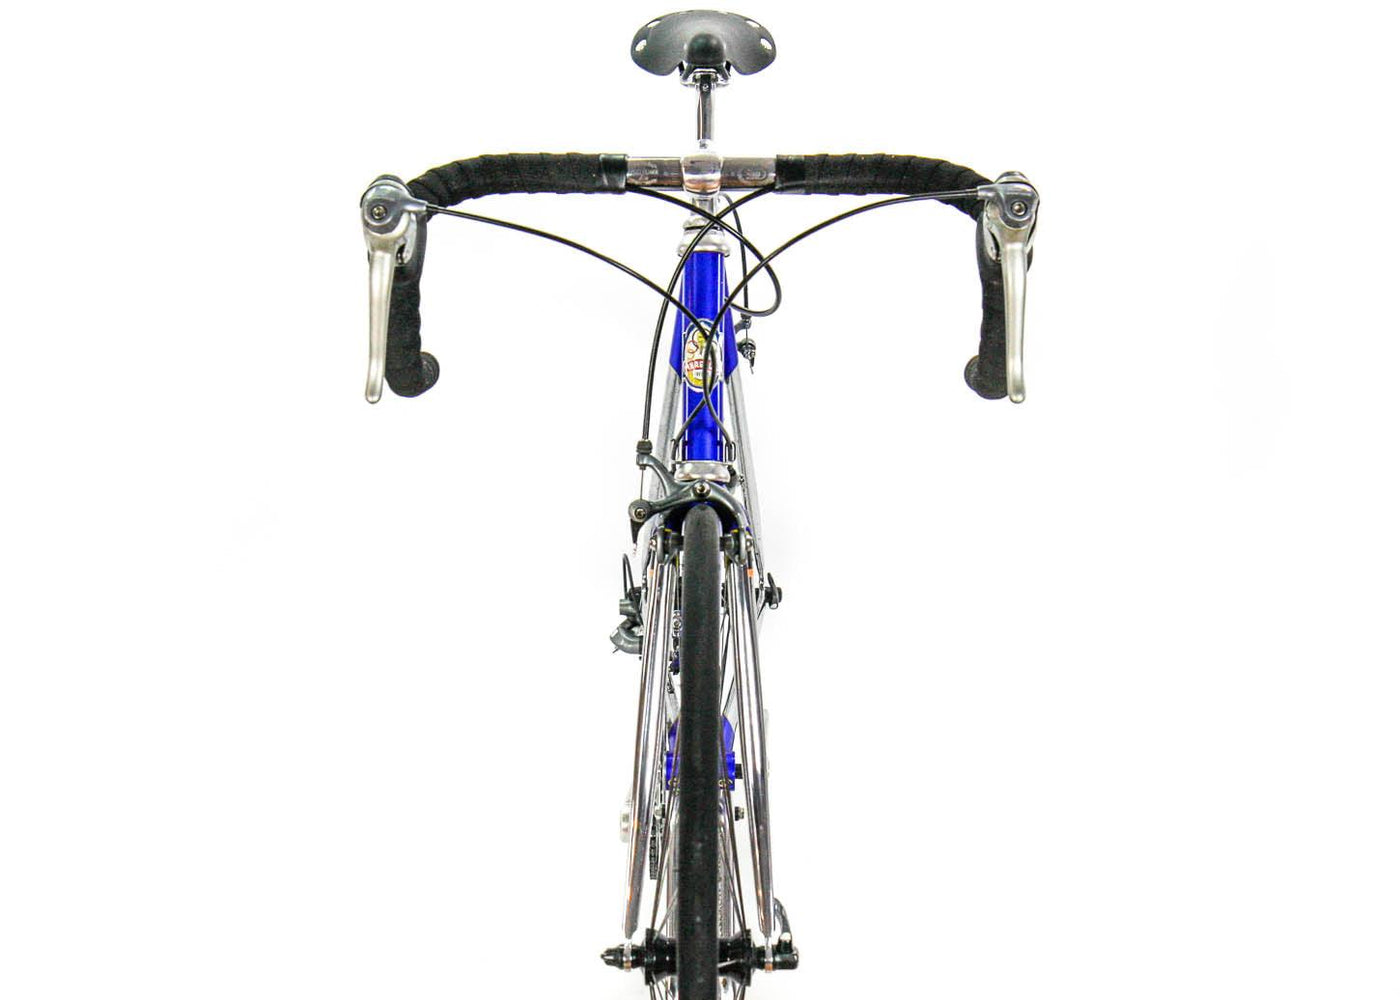 Pinarello Radius 1990s Road Bicycle - Steel Vintage Bikes